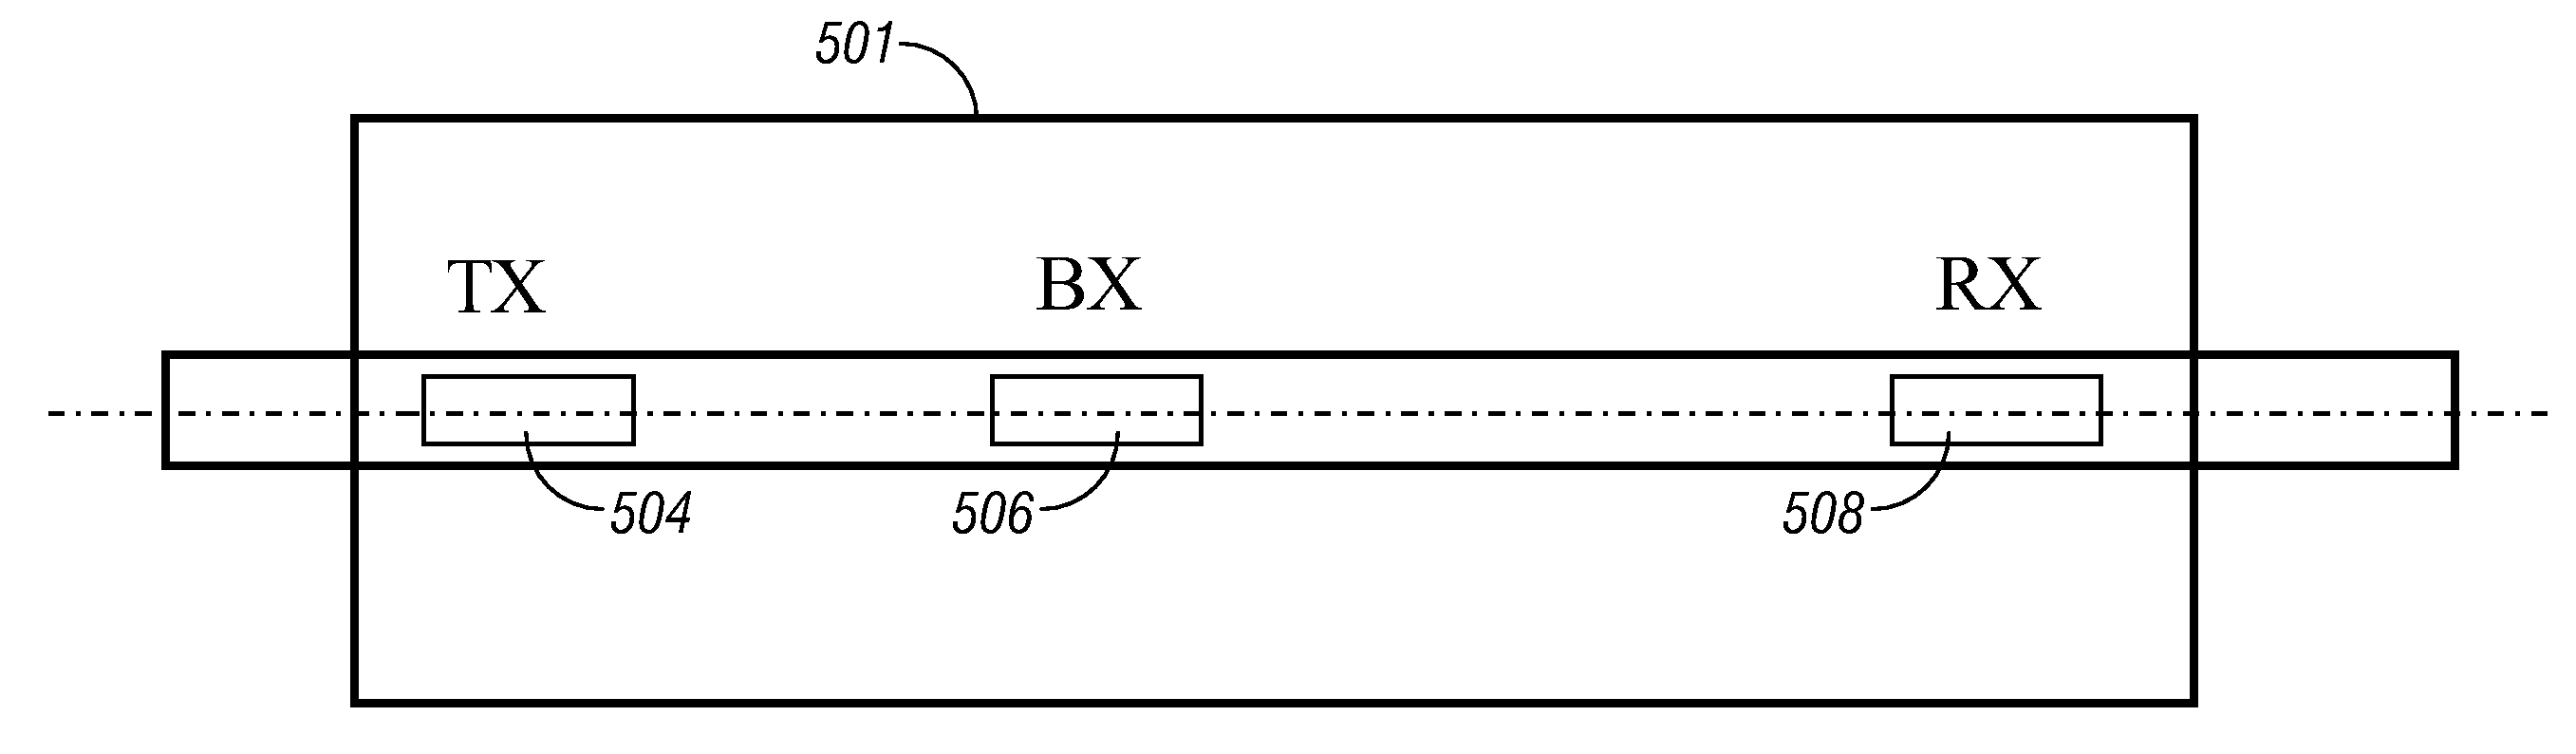 Cross-Component Alignment Measurement and Calibration